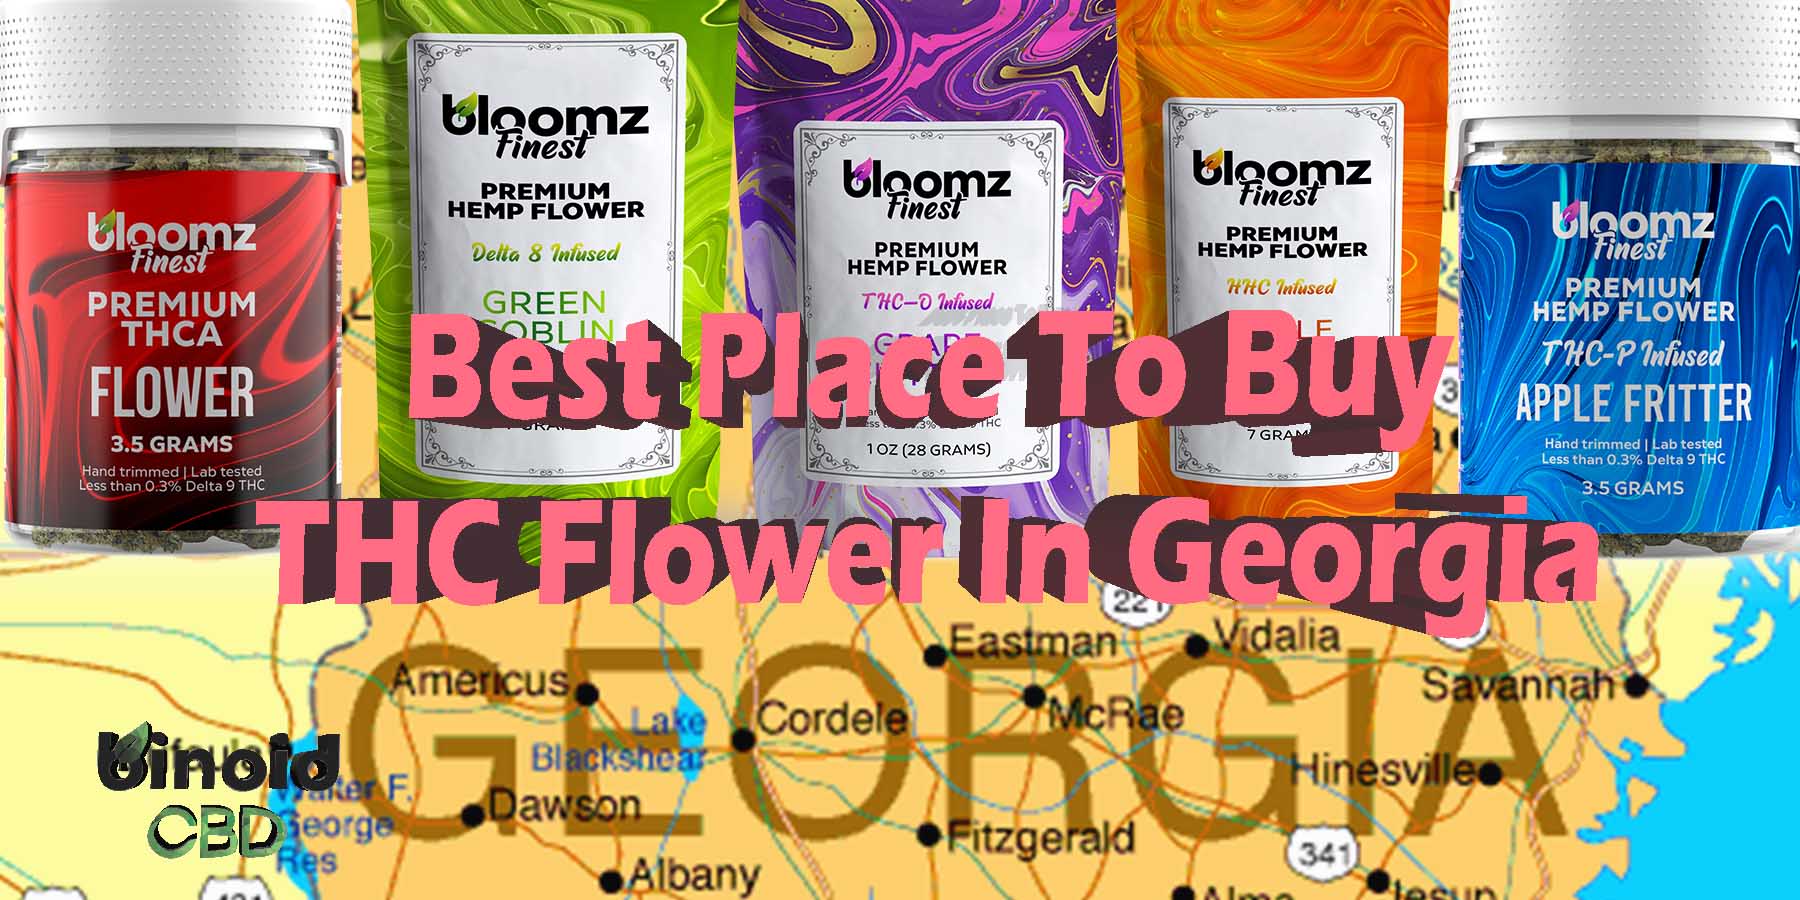 Buy THC Flower Georgia Joints PreRolls Get Online Near Me For Sale Best Brand Strongest-Real Legal Store-Shop Reddit Binoid